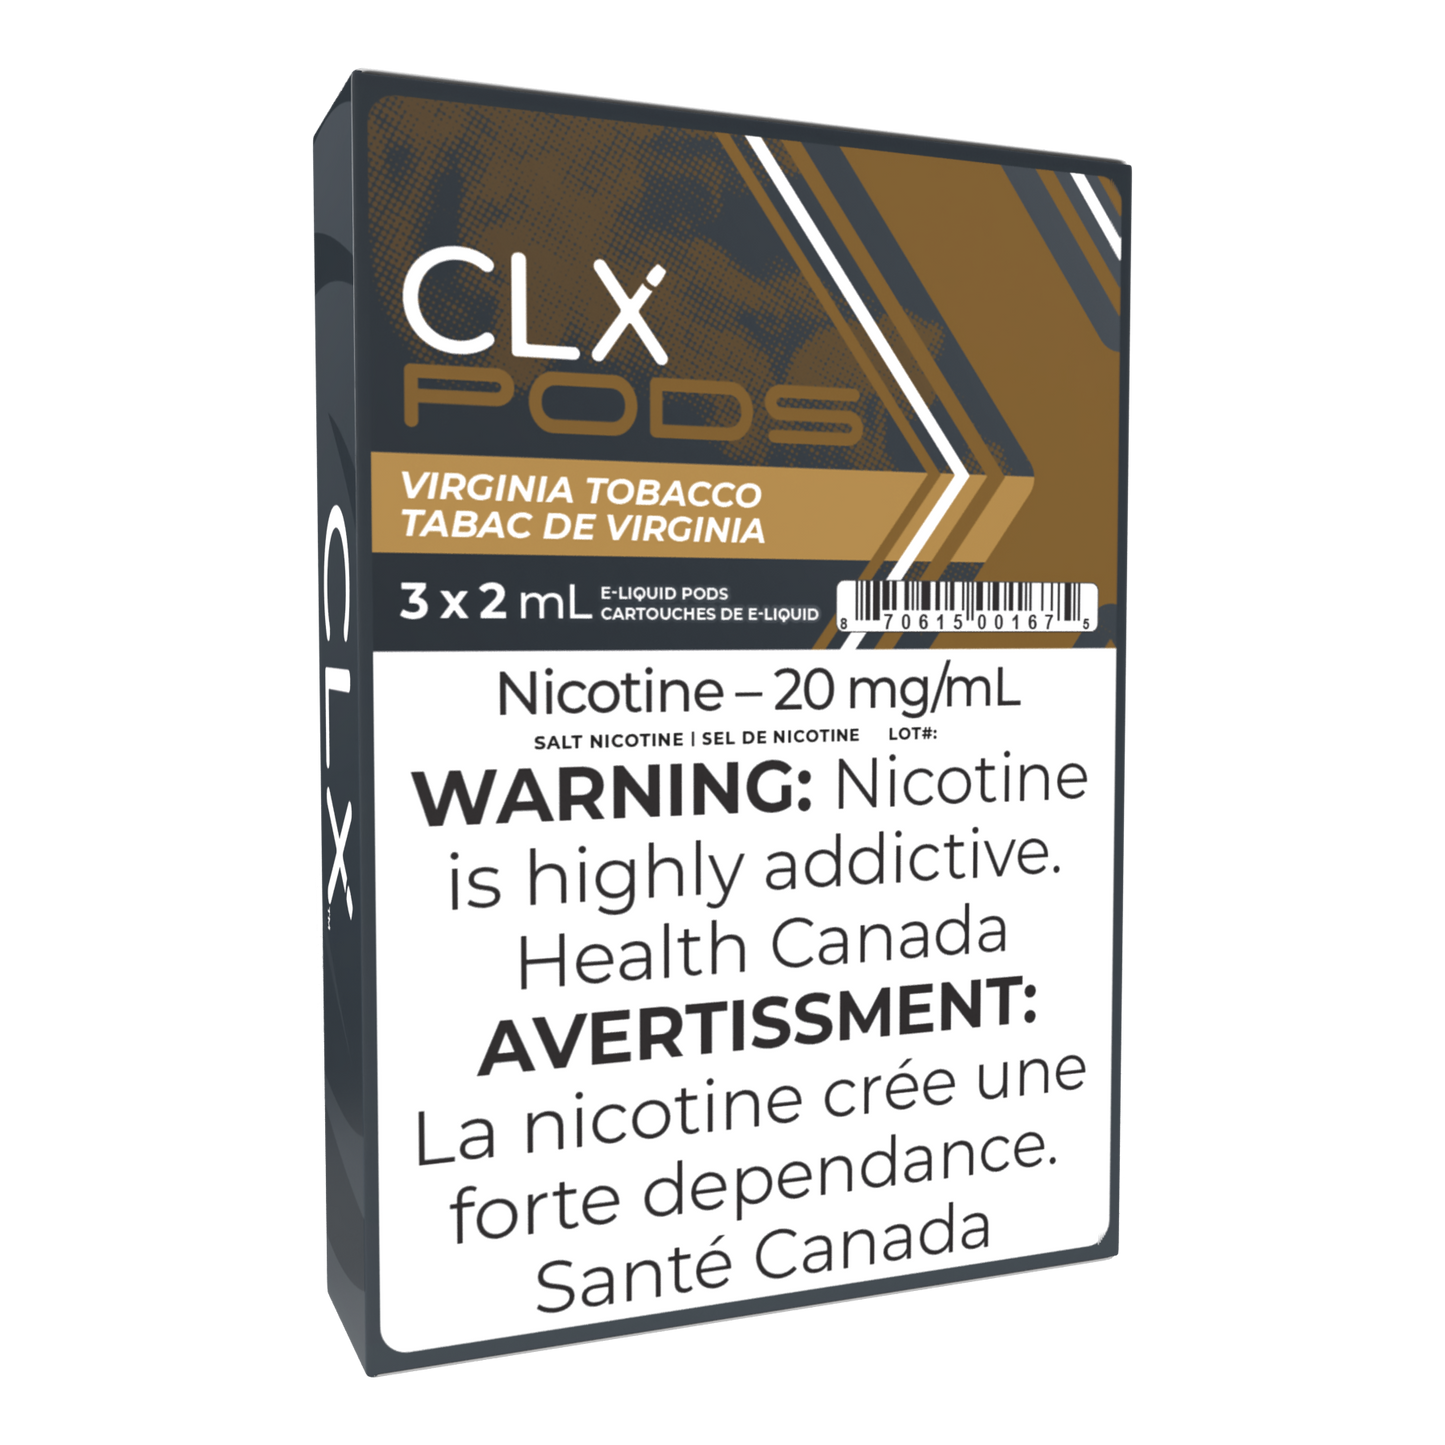 CLX - Virginia Tobacco Pods